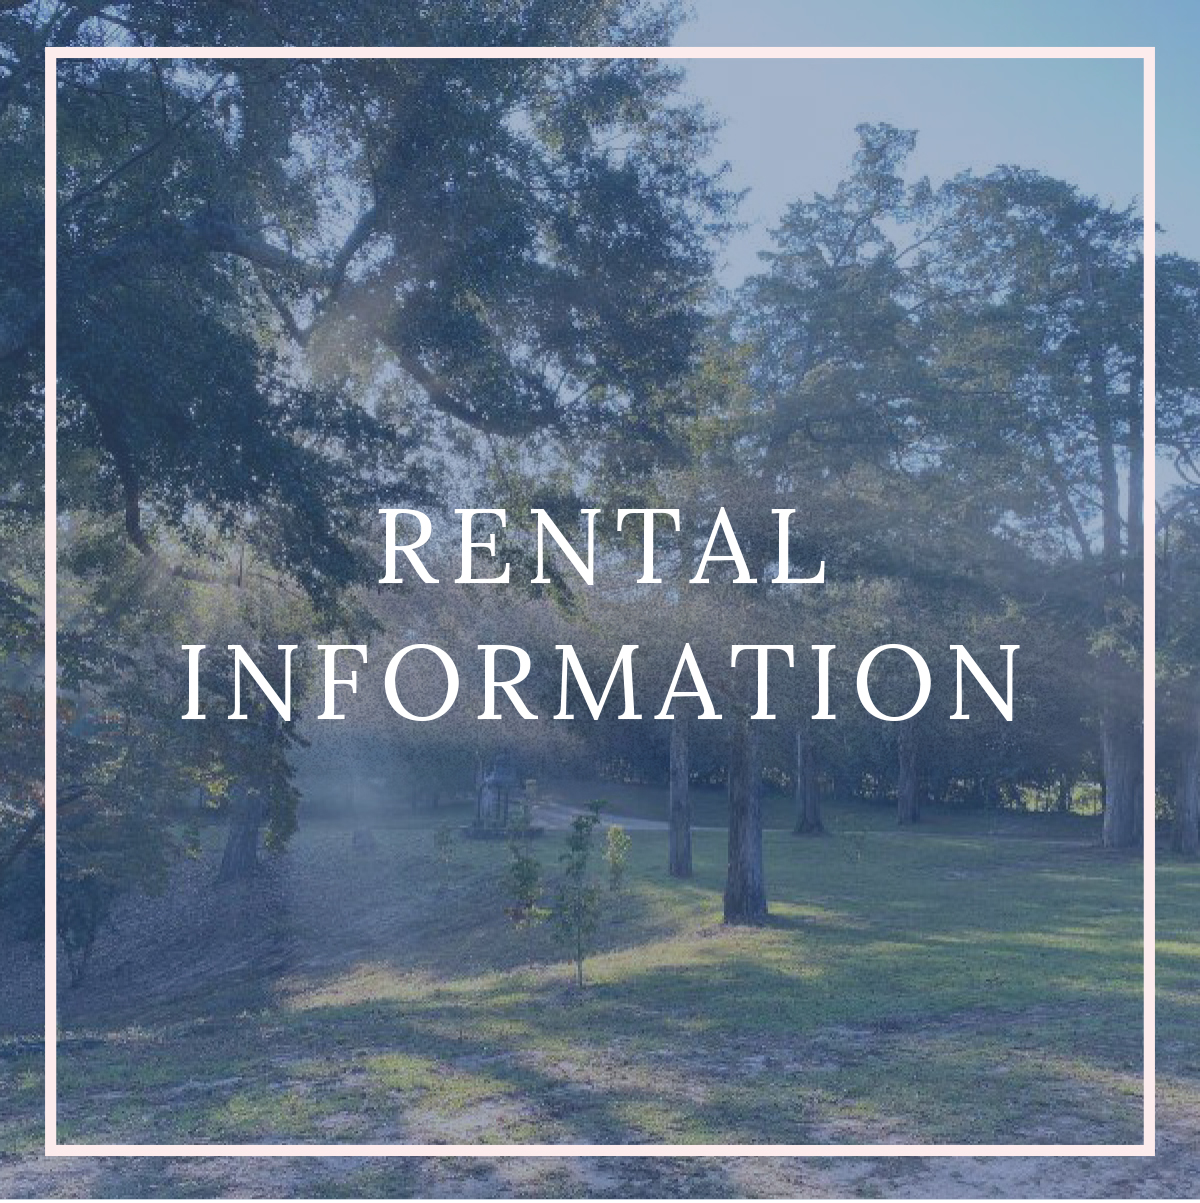 A poster for Rental Information